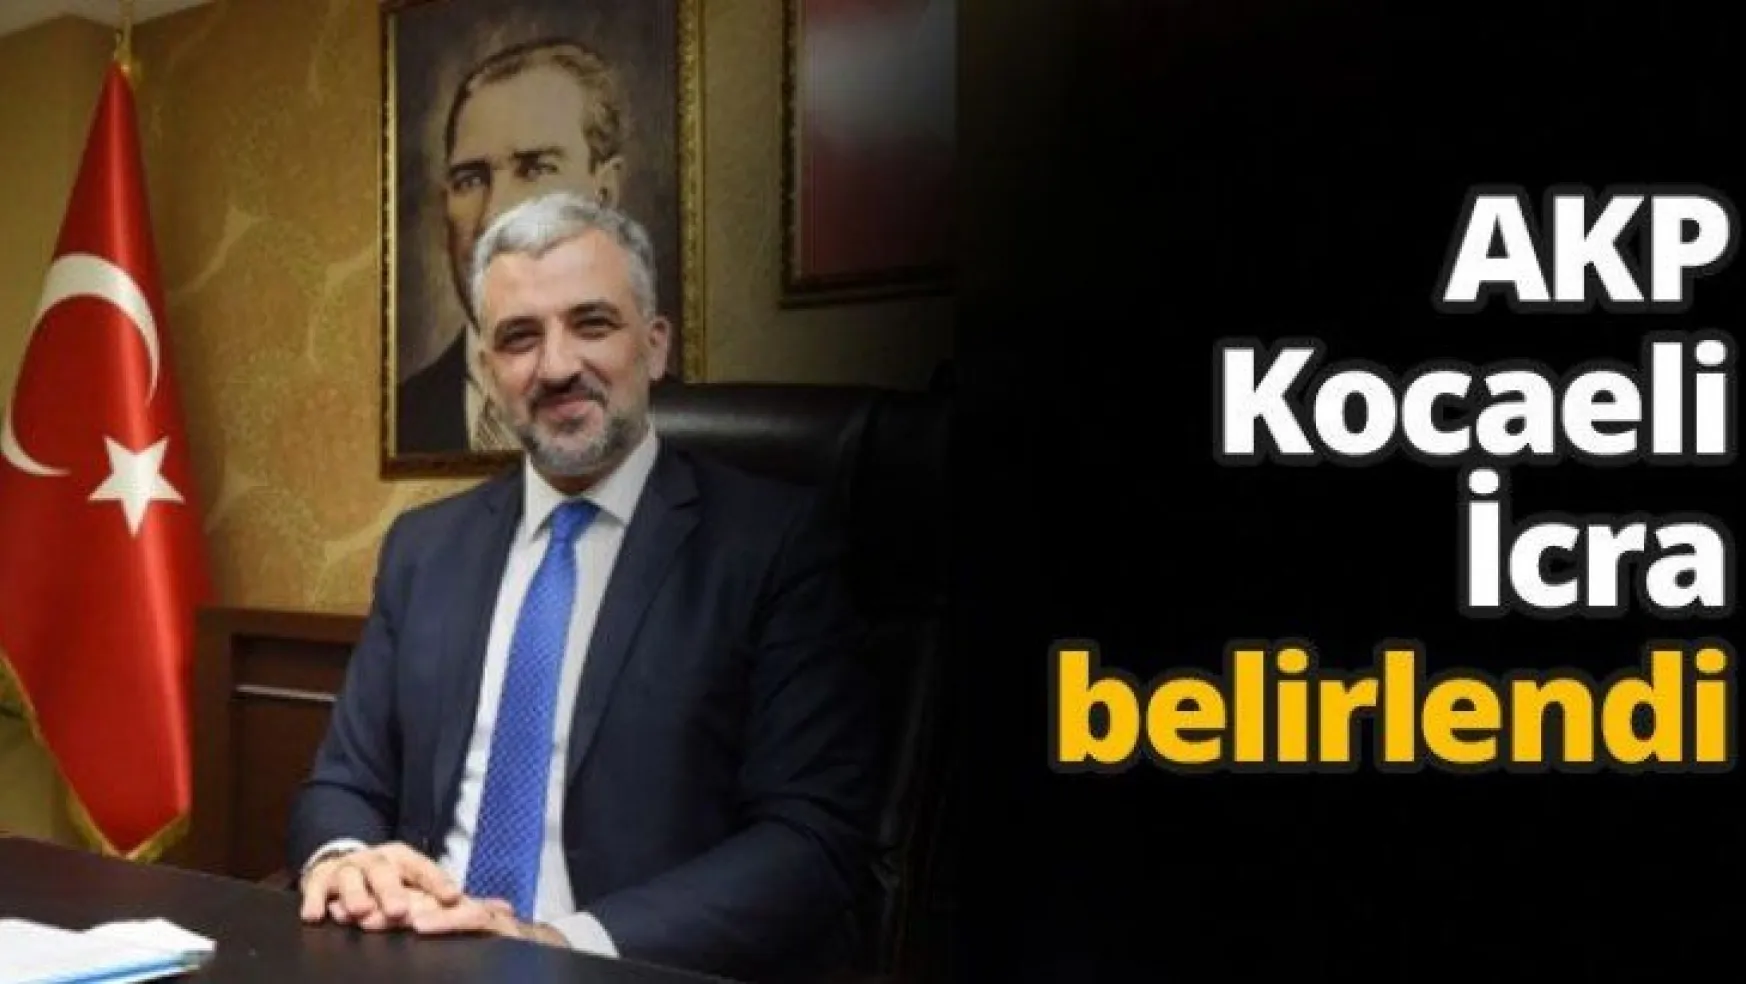 AKP Kocaeli İcra belirlendi